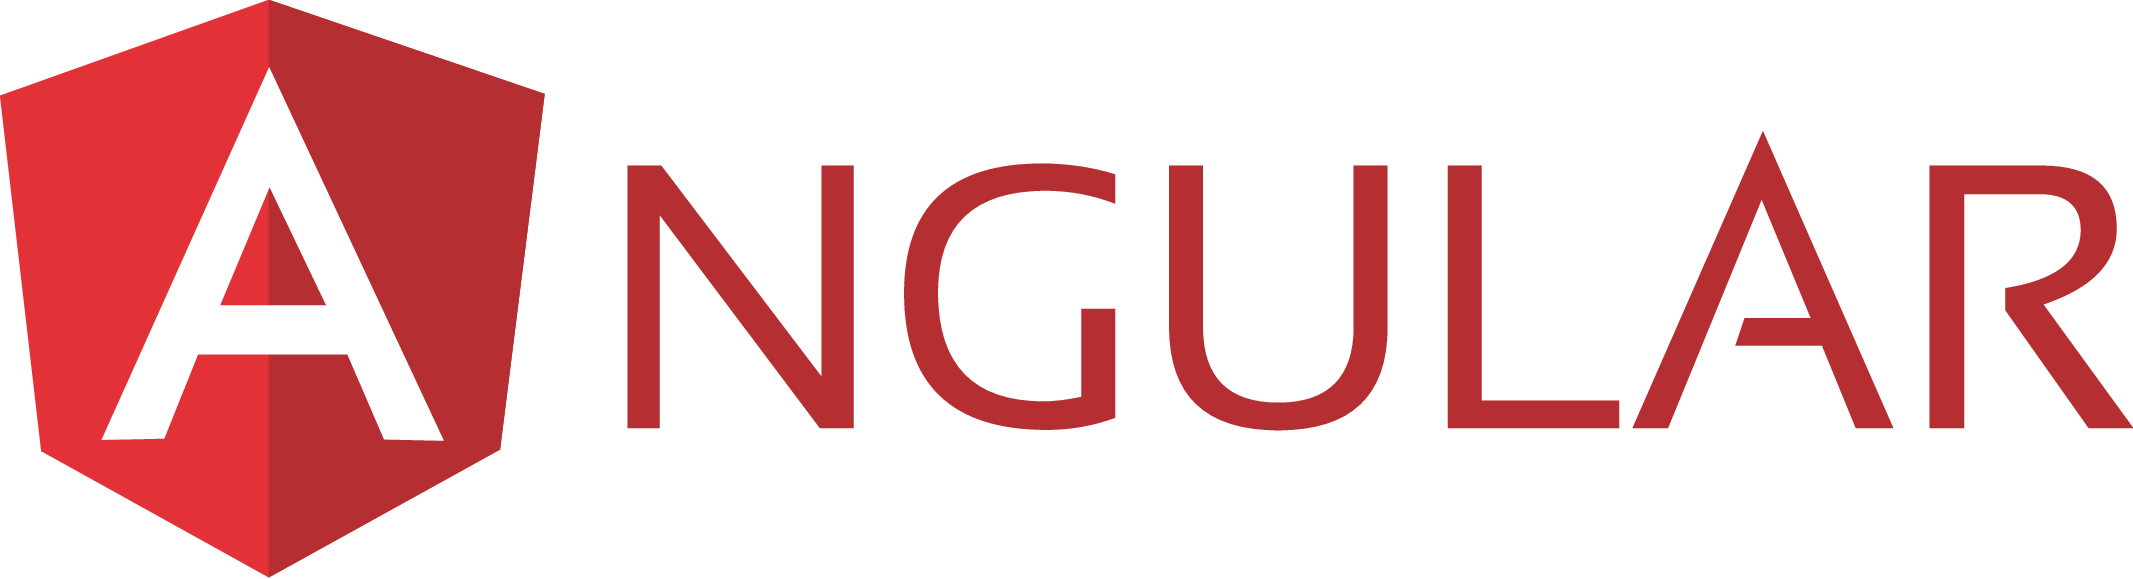 angular-logo-icon-png-svg